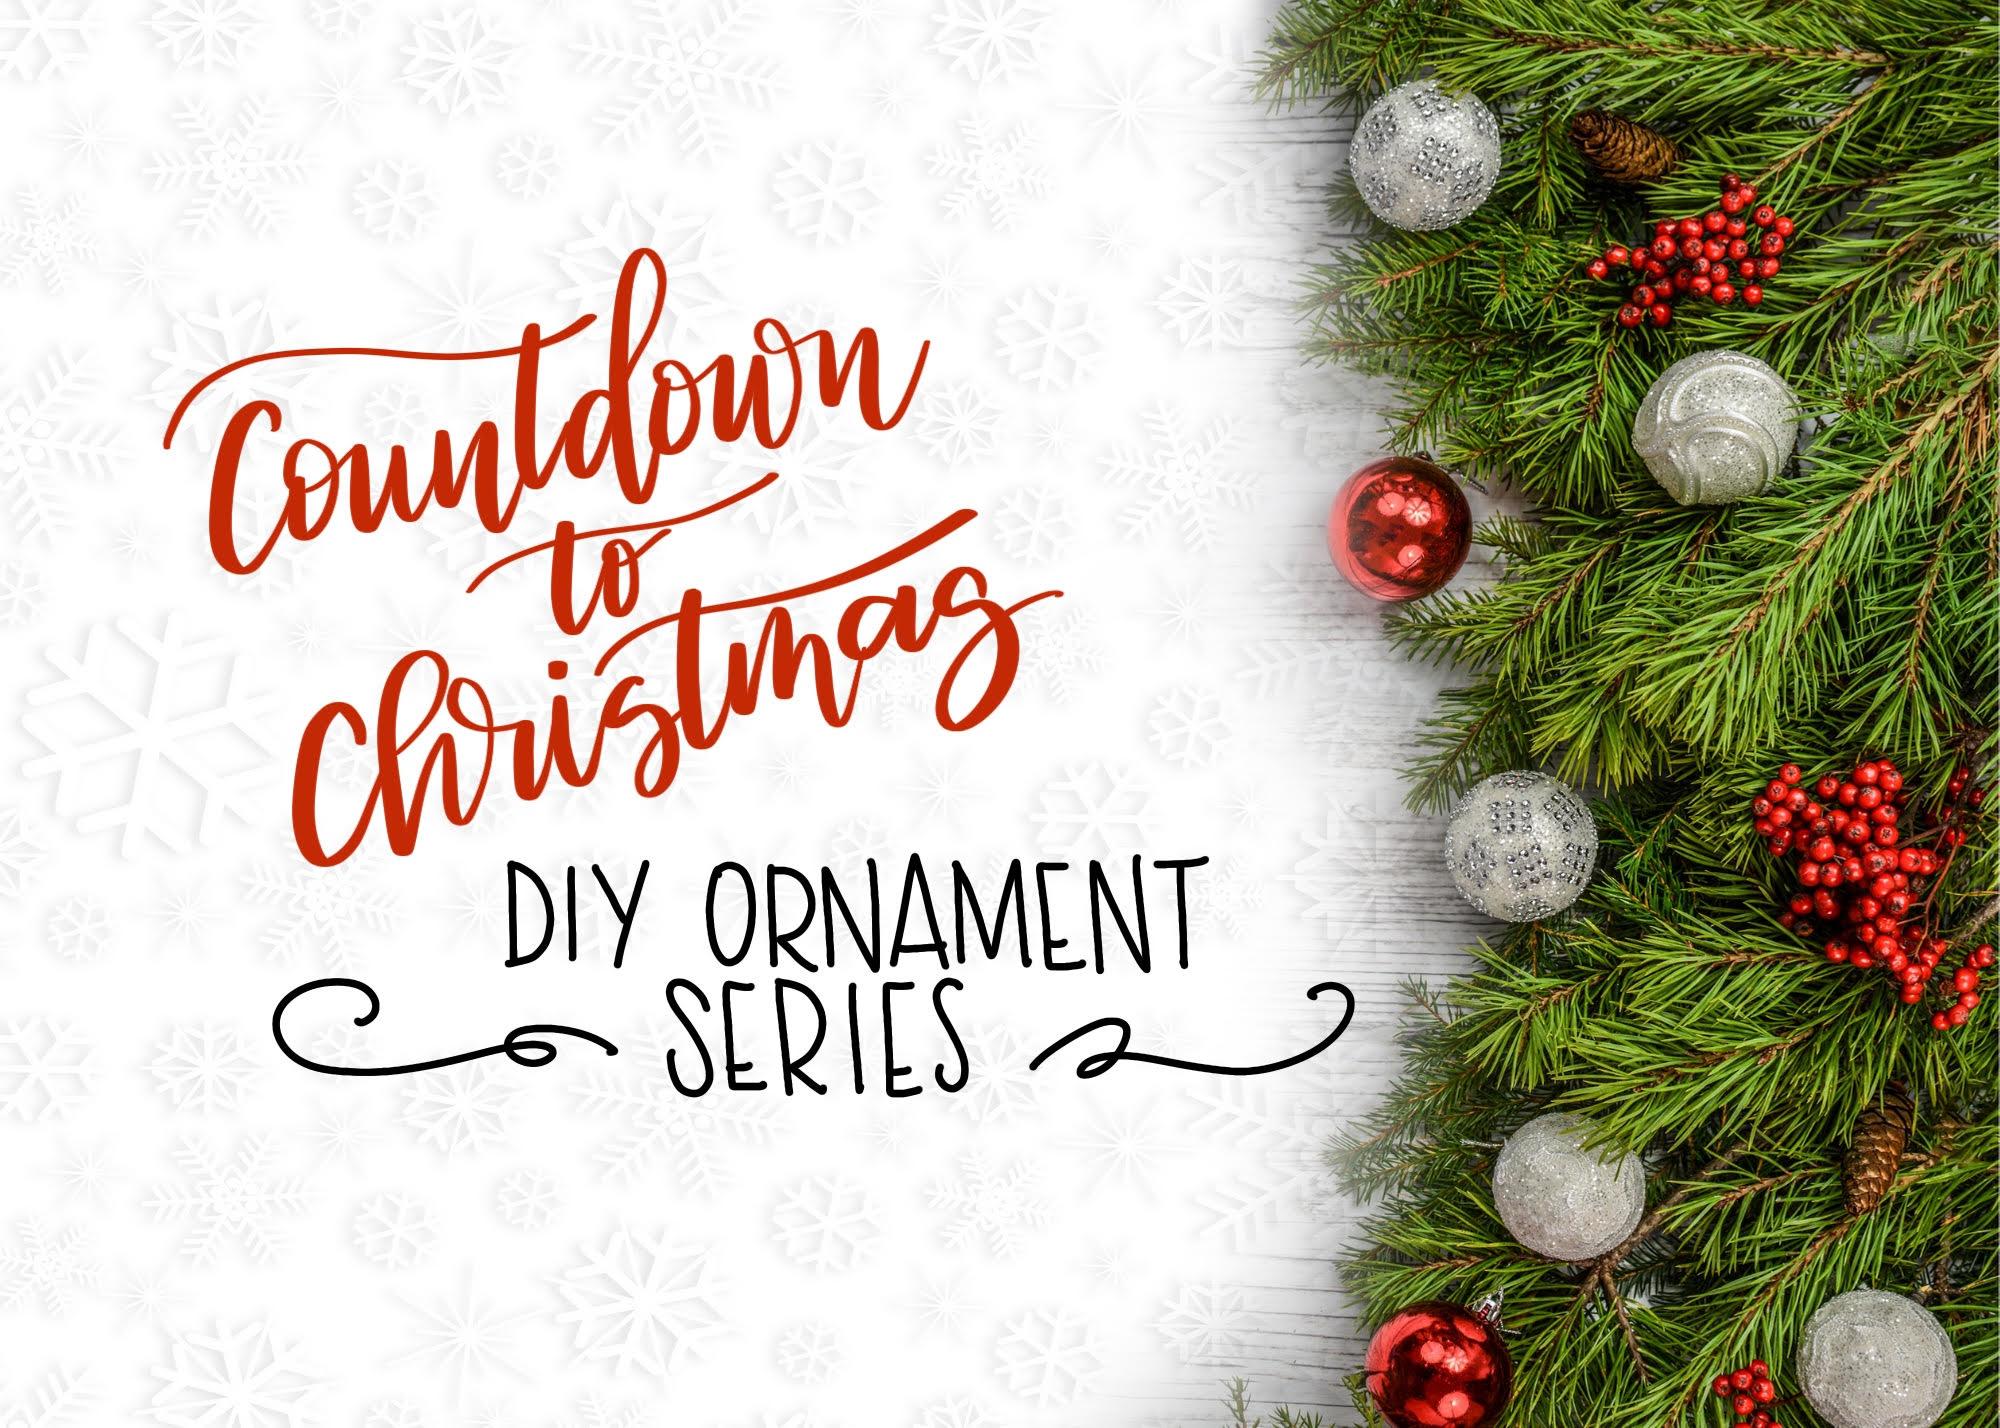 Imagen promocional de línea de adornos navideños vinculados al Countdown to Christmas